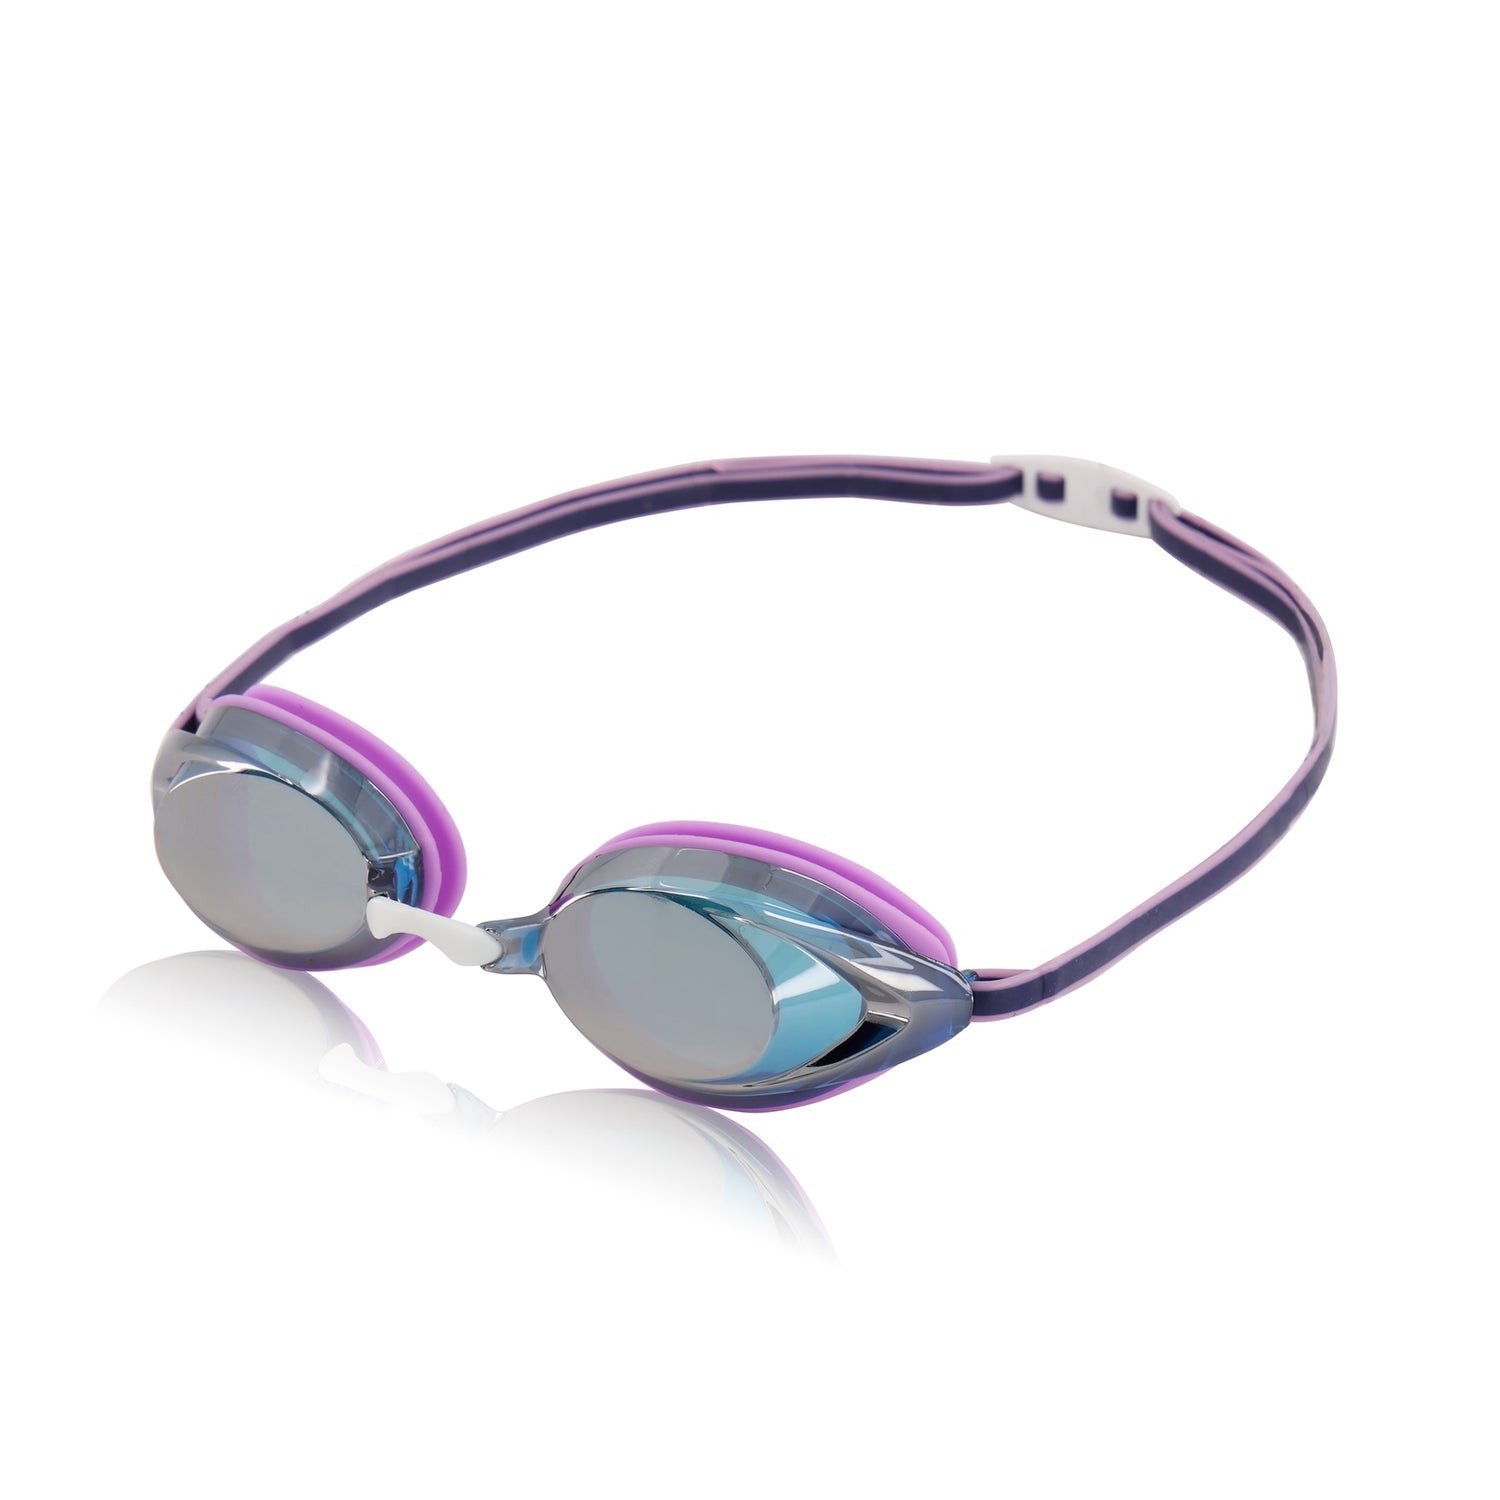 Speedo Gafas de natación para mujer Mirrored Vanquisher 2.0